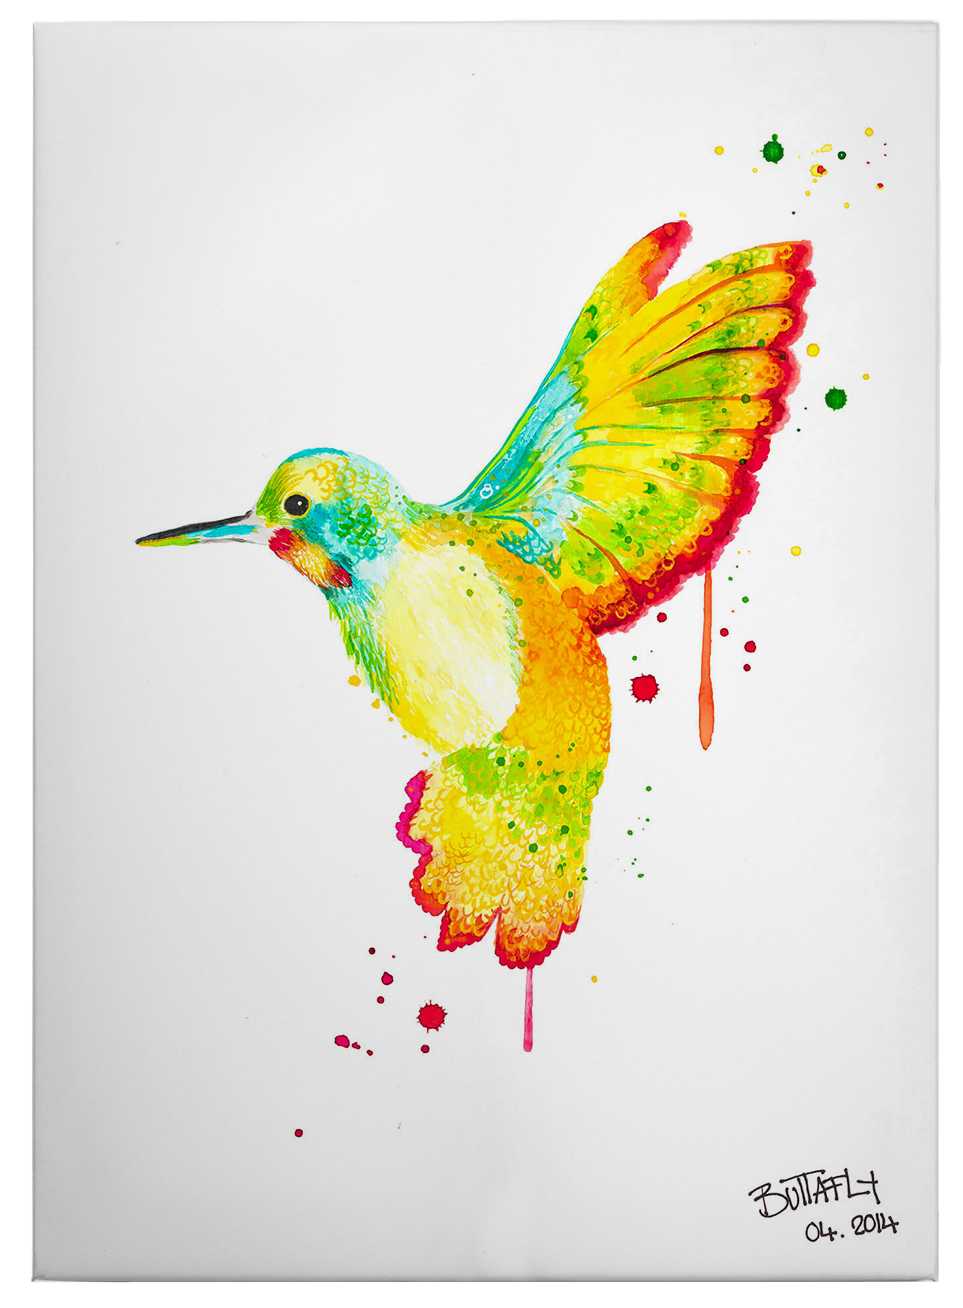             Humingbird by Buttafly, impresión en lienzo con colibrí de colores - 0,50 m x 0,70 m
        